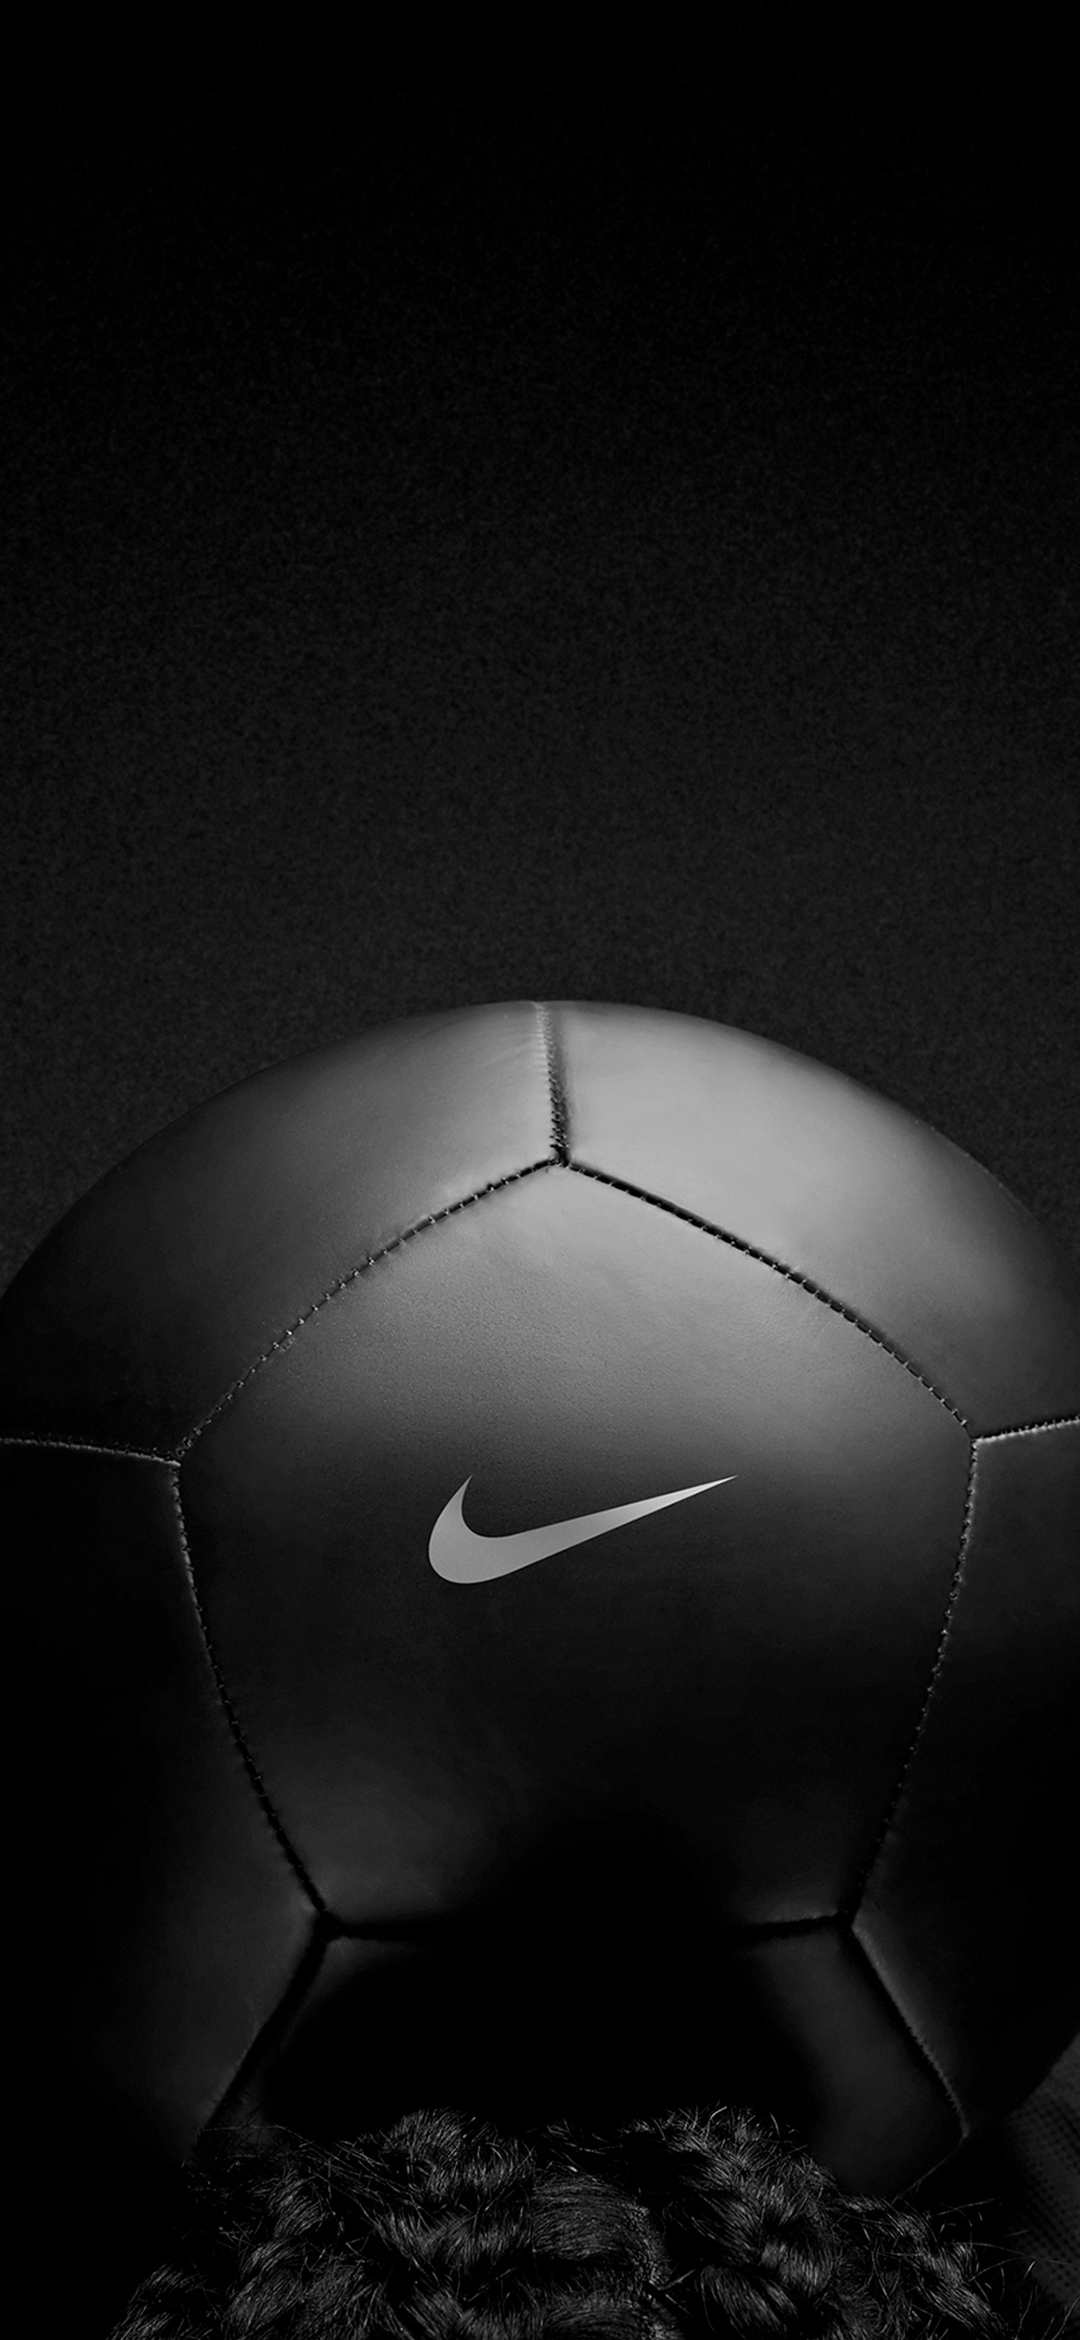 Black Nike Soccer Ball Redmagic 5 Android スマホ壁紙 待ち受け スマラン